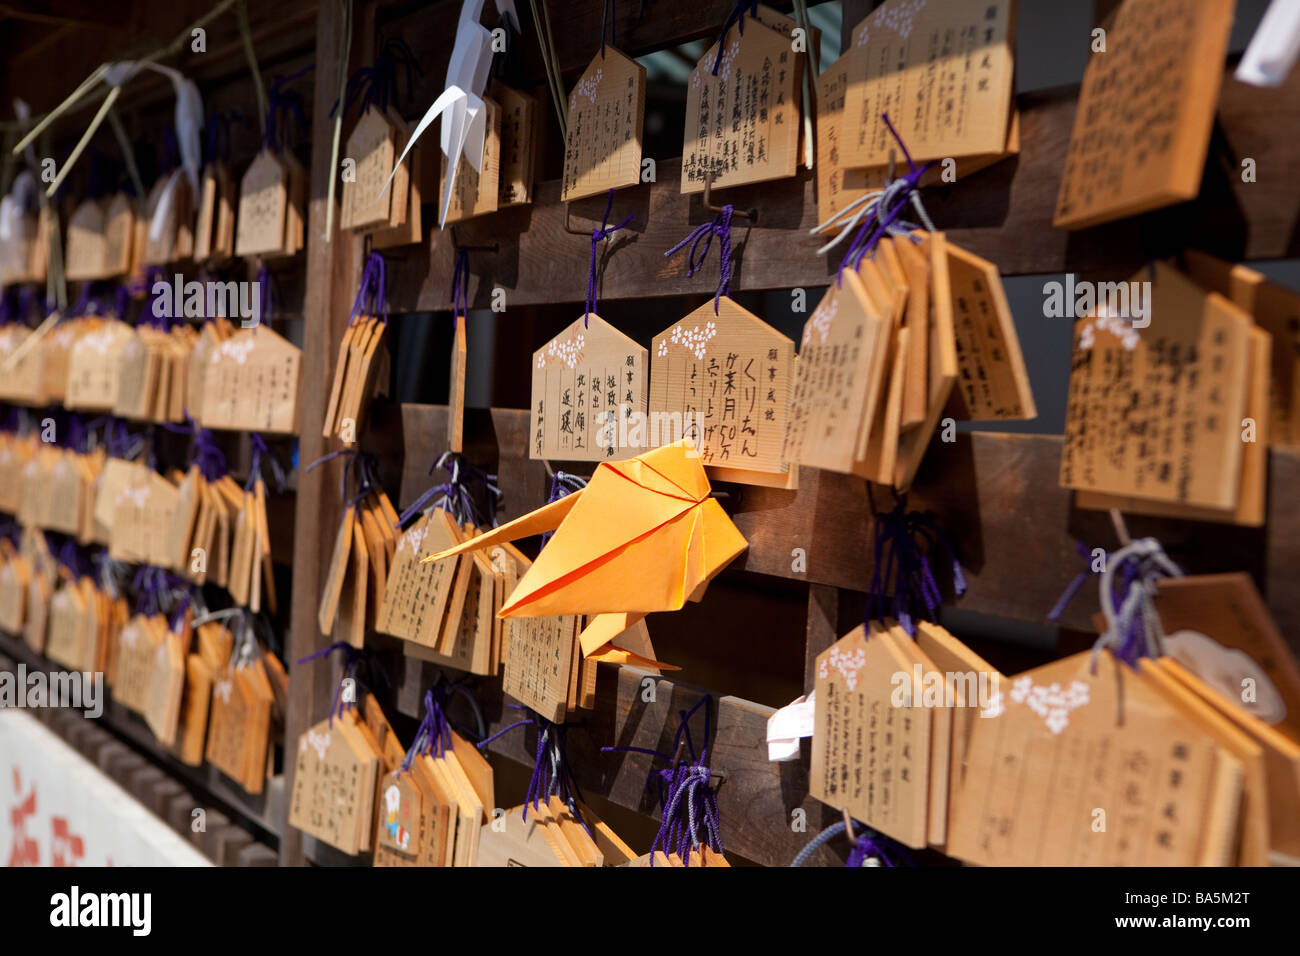 Wishes written near the Shrine Stock Photo